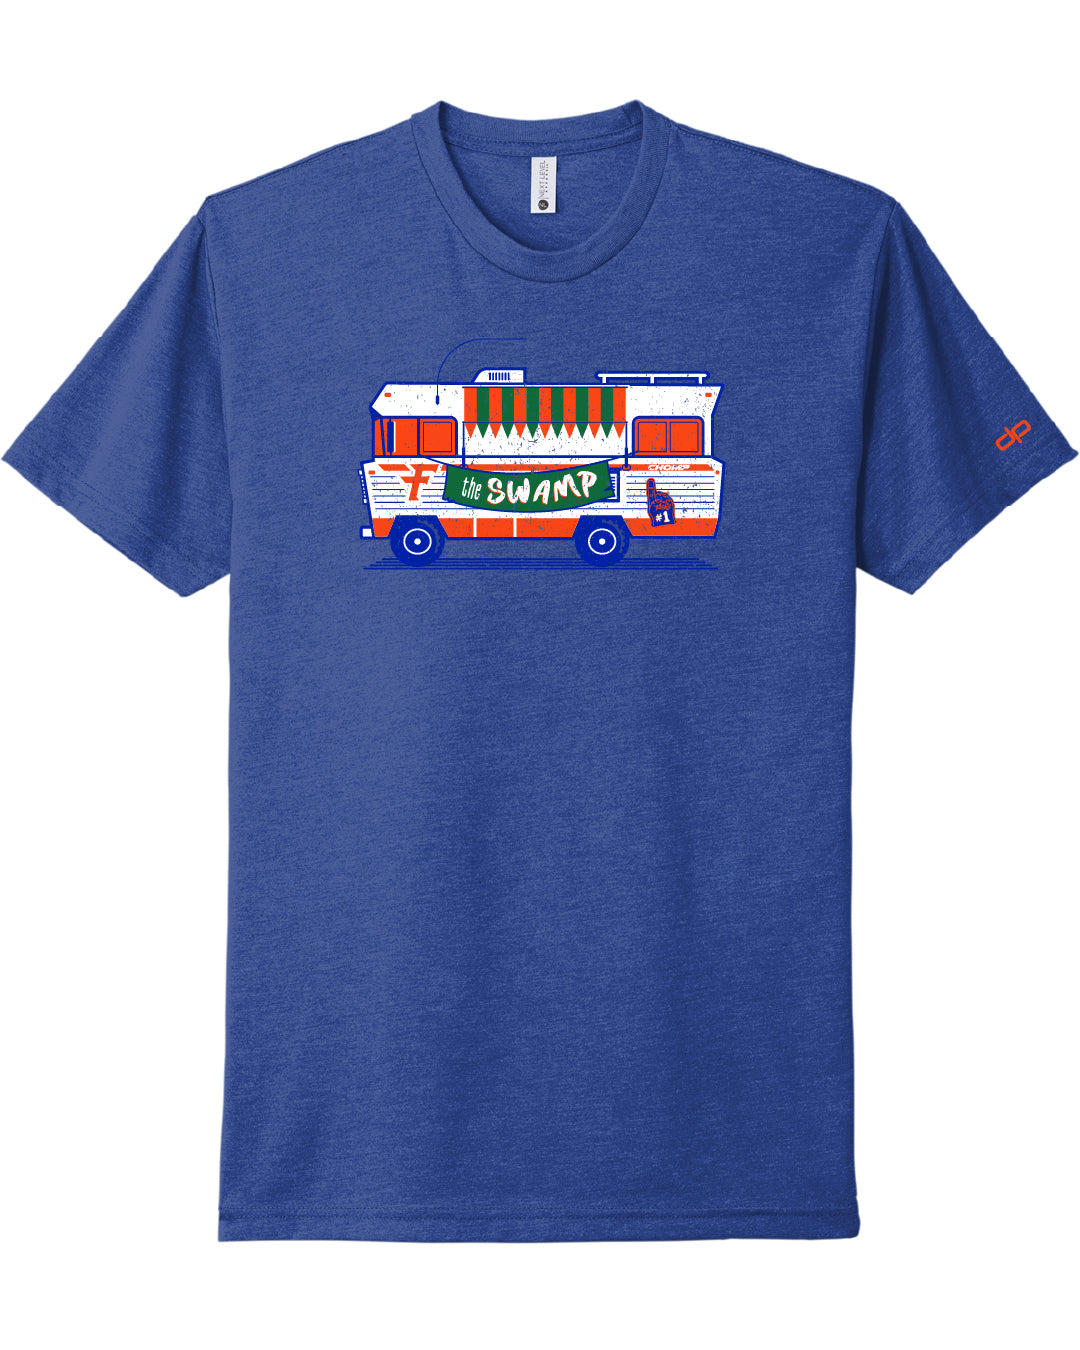 Win The Tailgate SE t-shirt